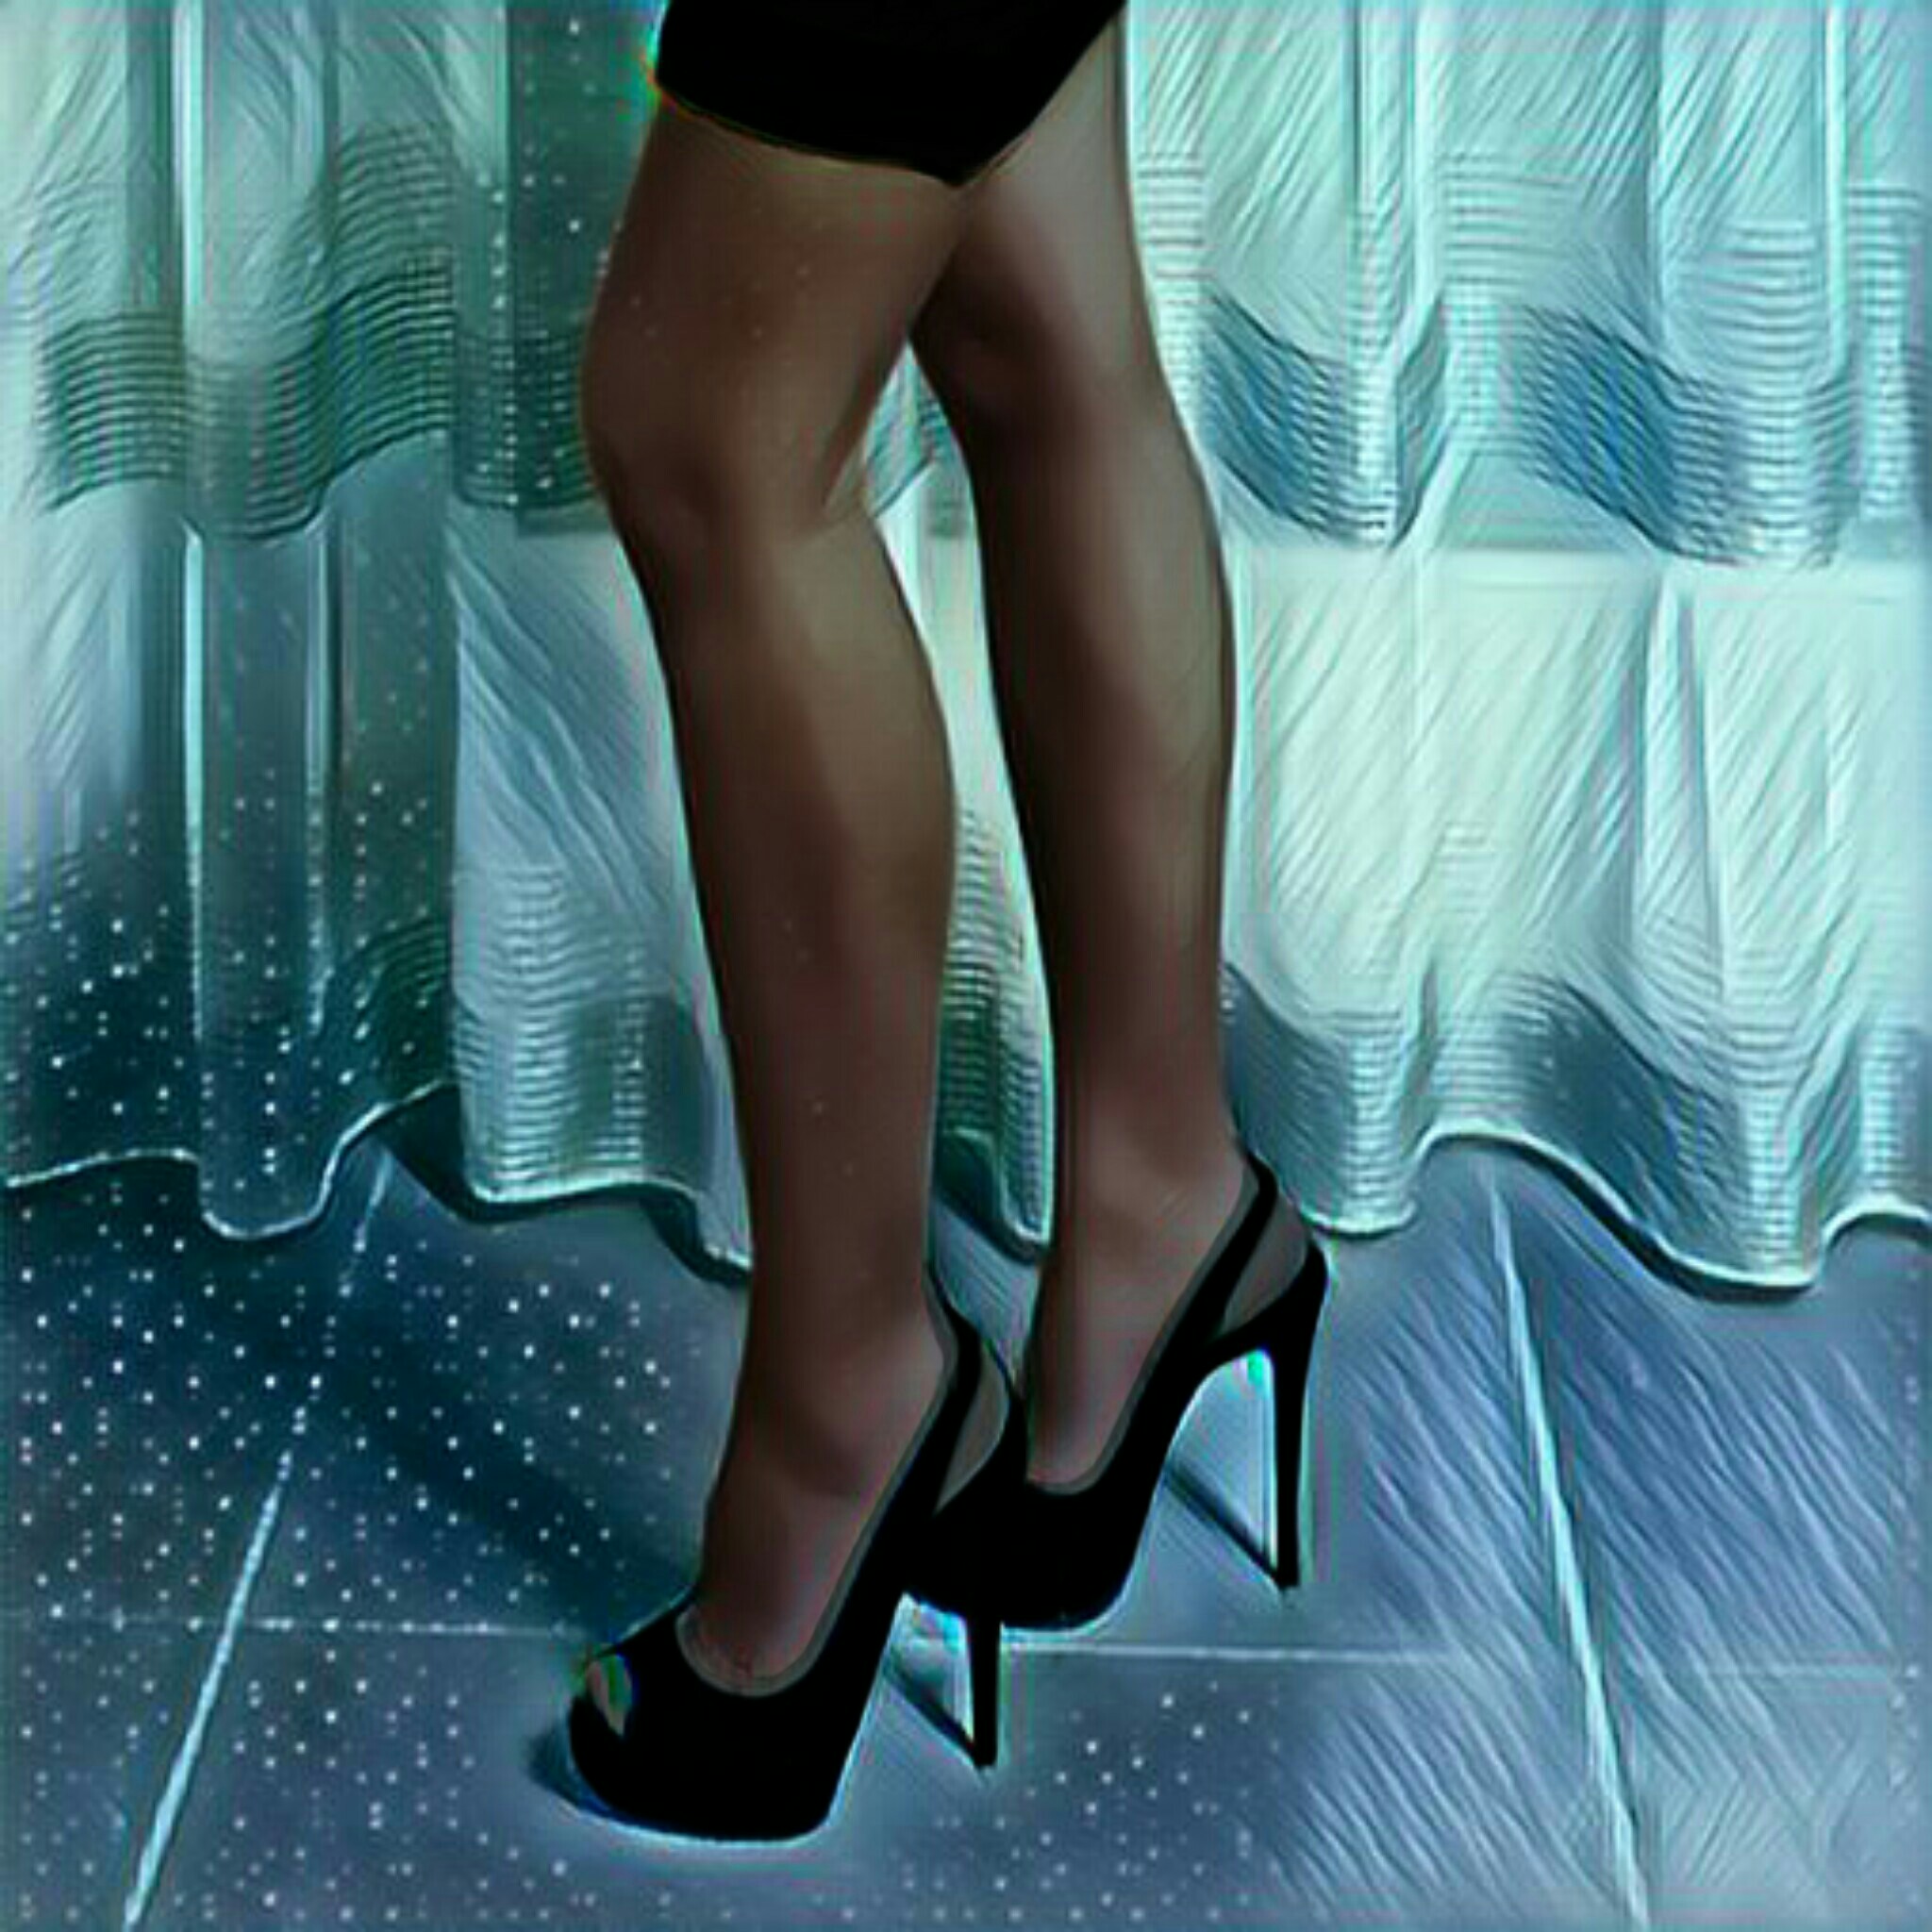 Freetoedit Legs Stockings Pantyhose Image By Daelynsart